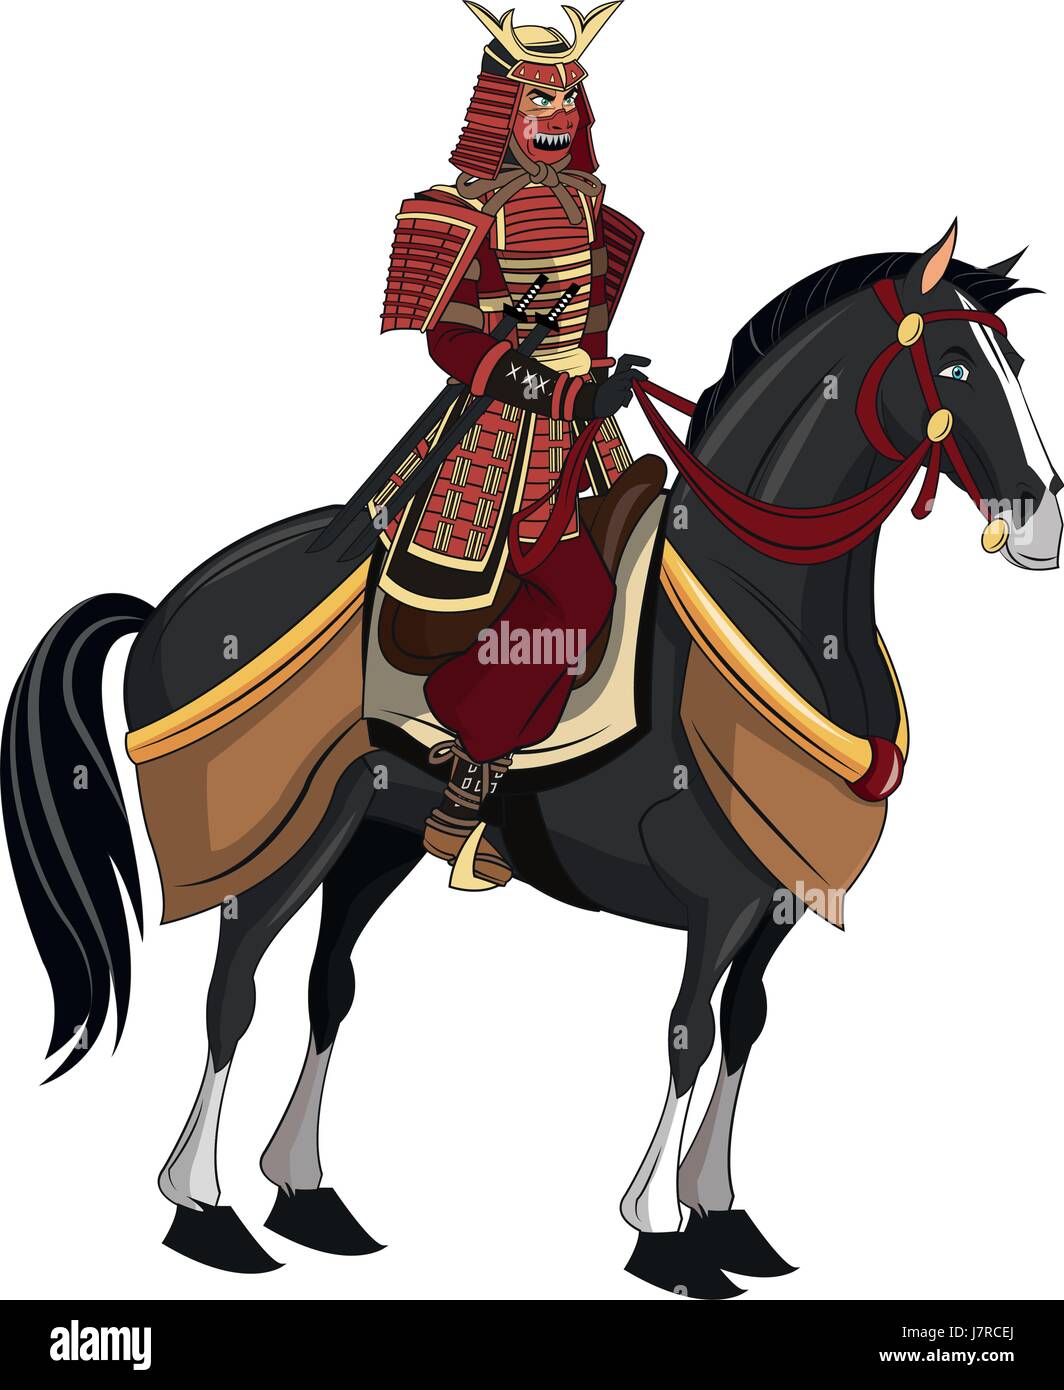 warrior samurai with armor traditional riding horse image Stock Vector